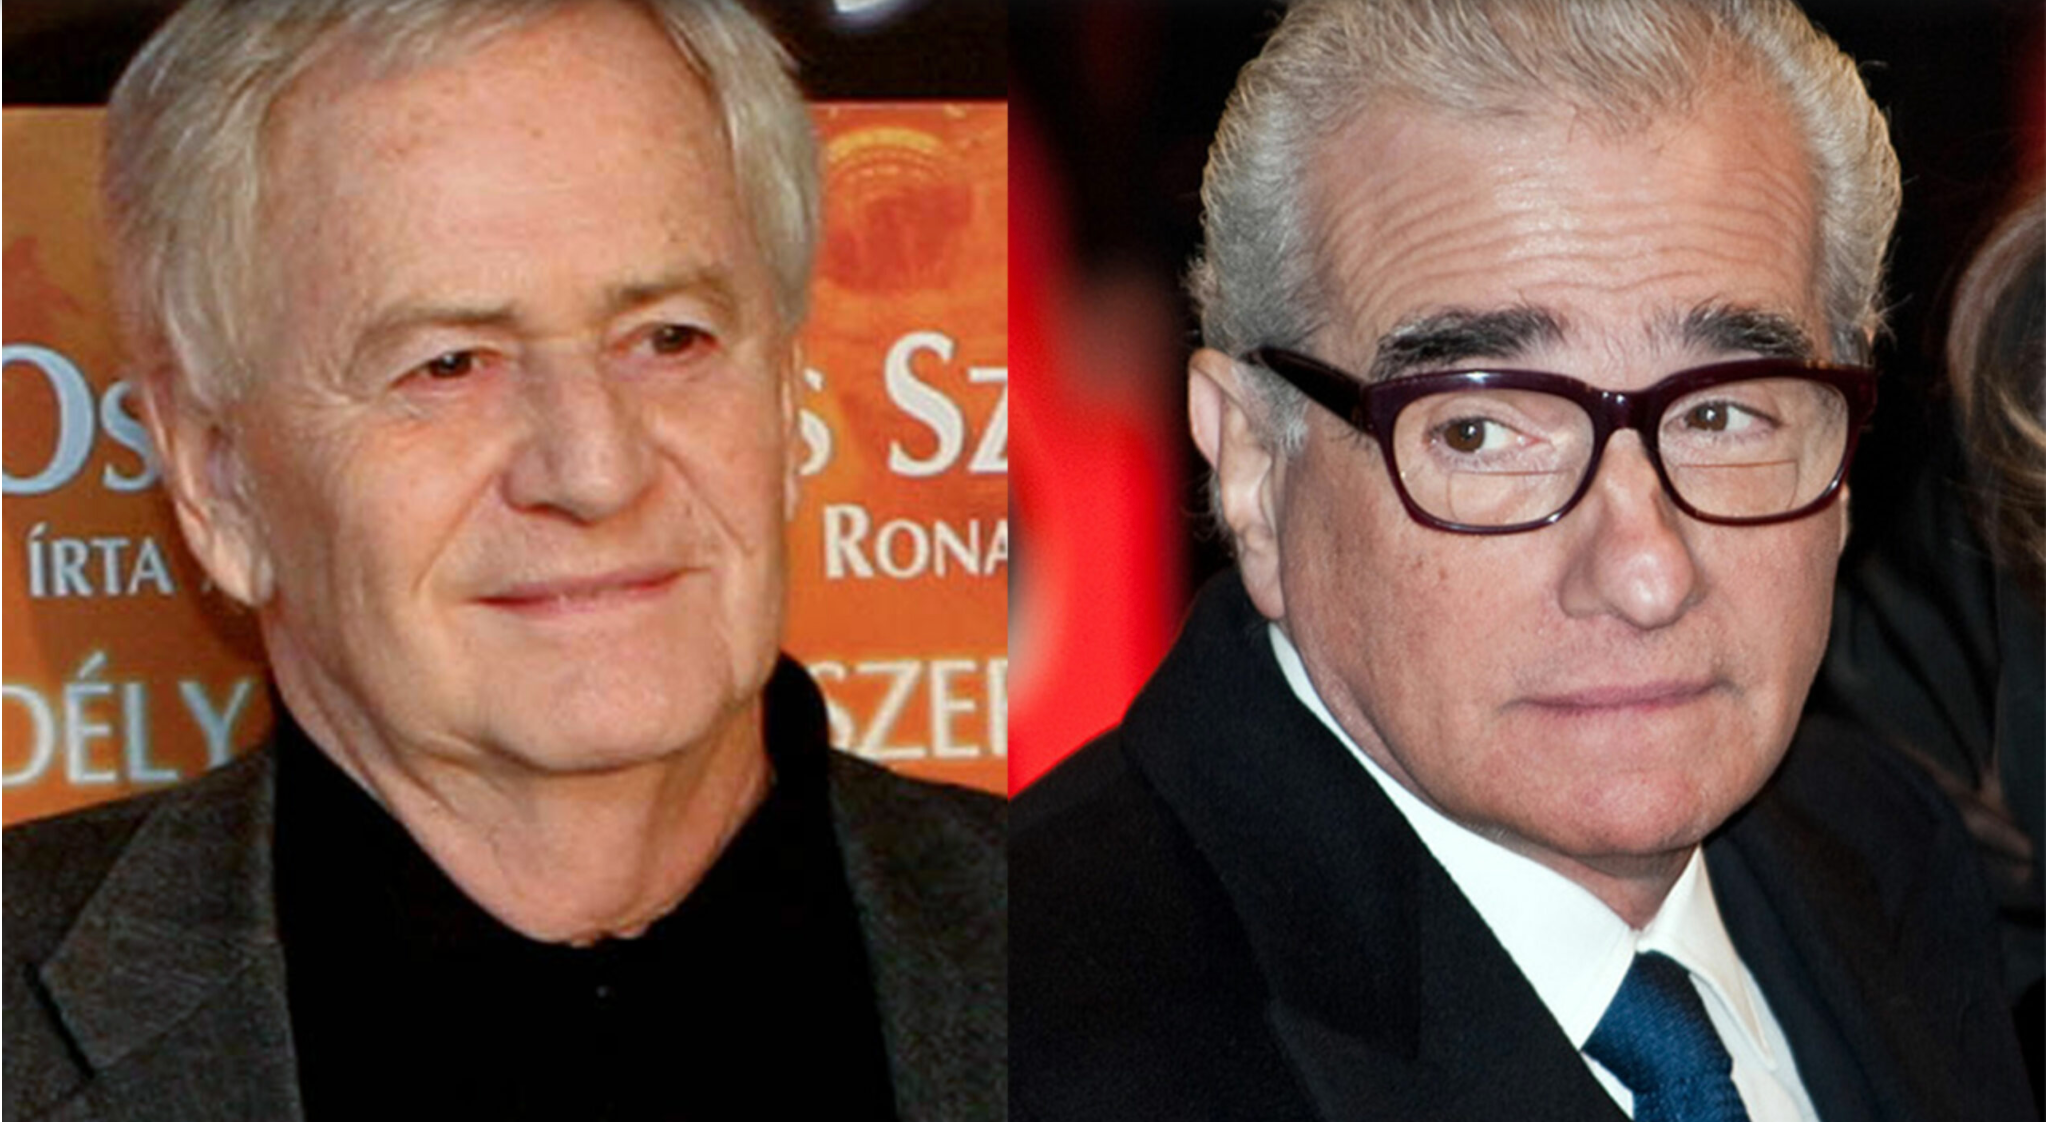 Martin Scorsese, Istevan Szabo to receive Satyajit Ray Lifetime Achievement award at 52nd IFFI